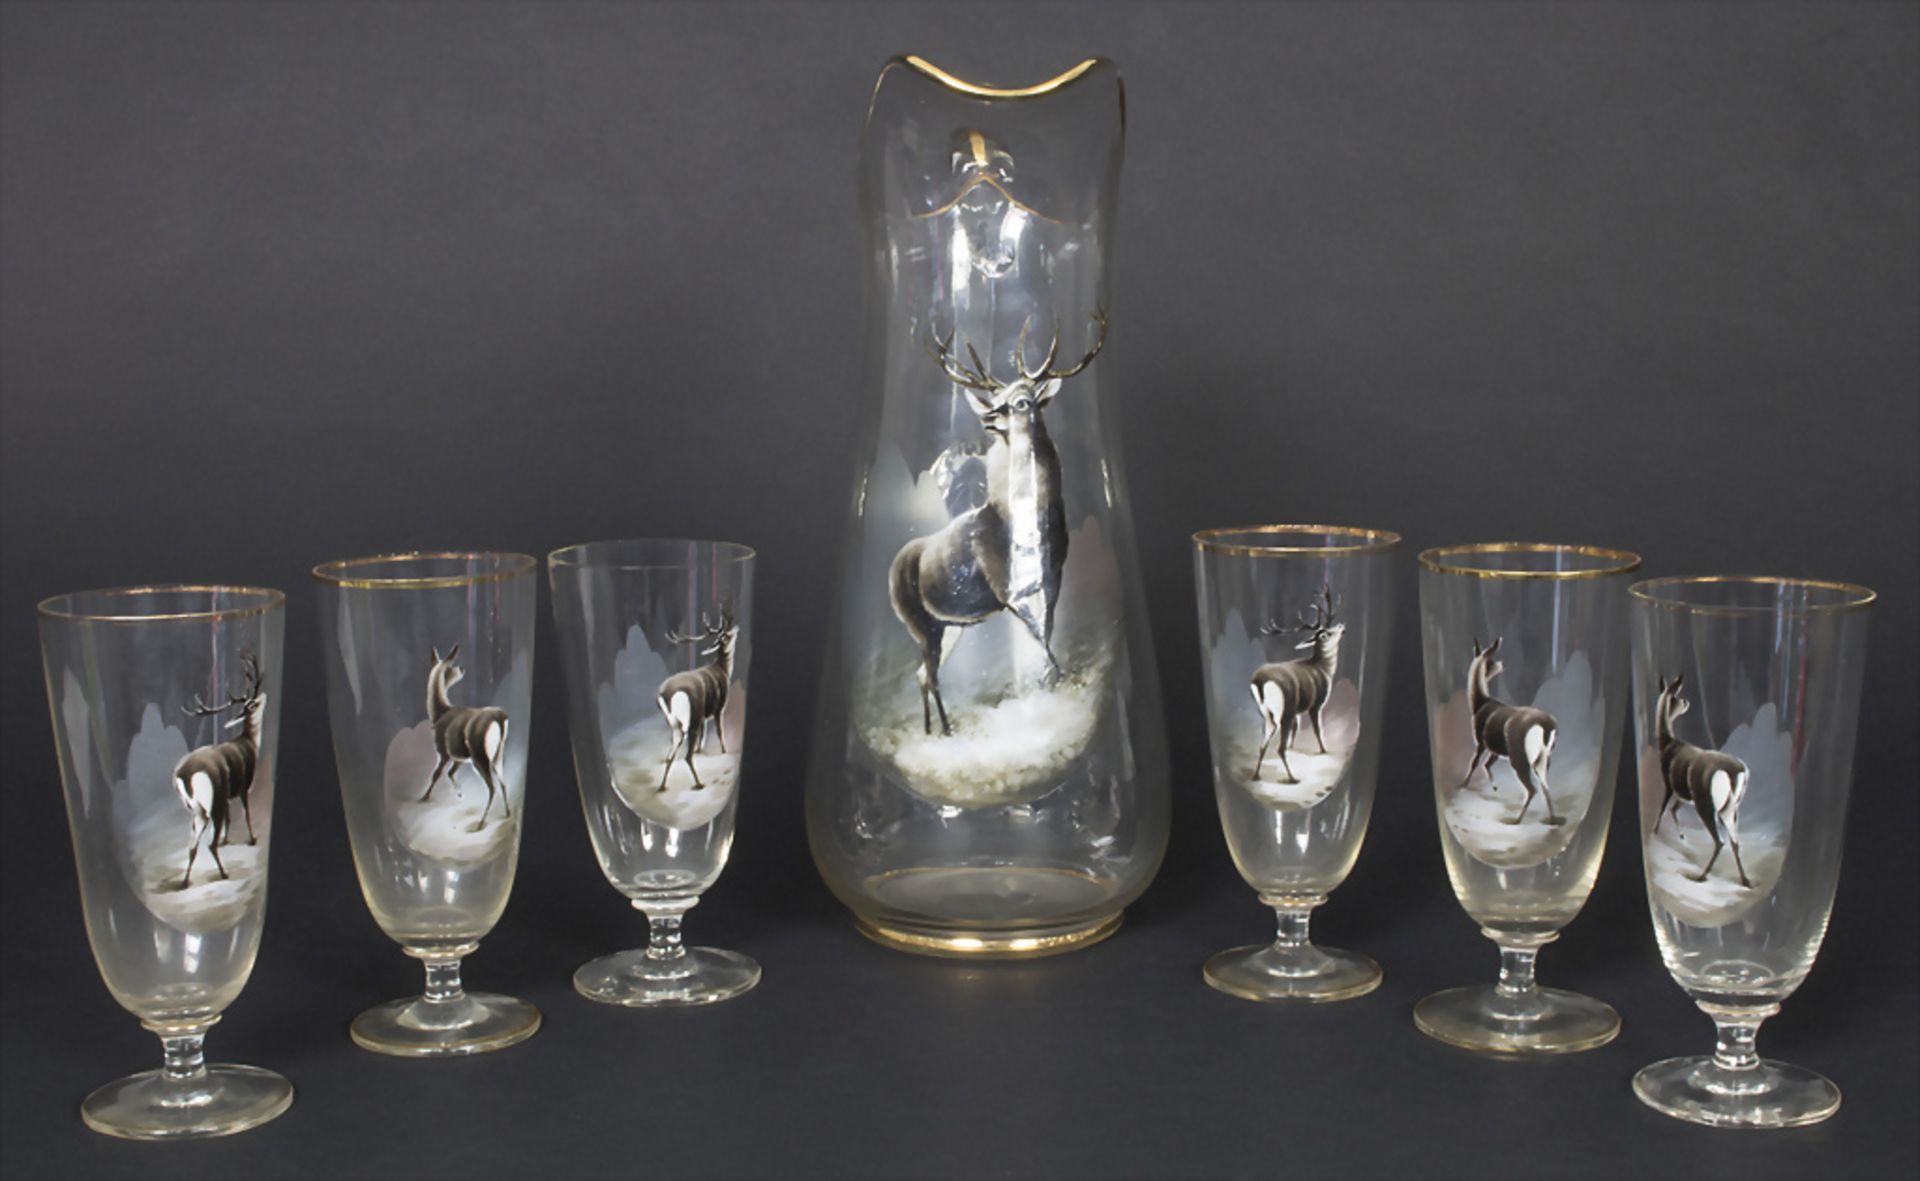 Saftkrug und 6 Gläser mit Hirschmotiven / A decanter and 6 glasses with deer decor, um 1900